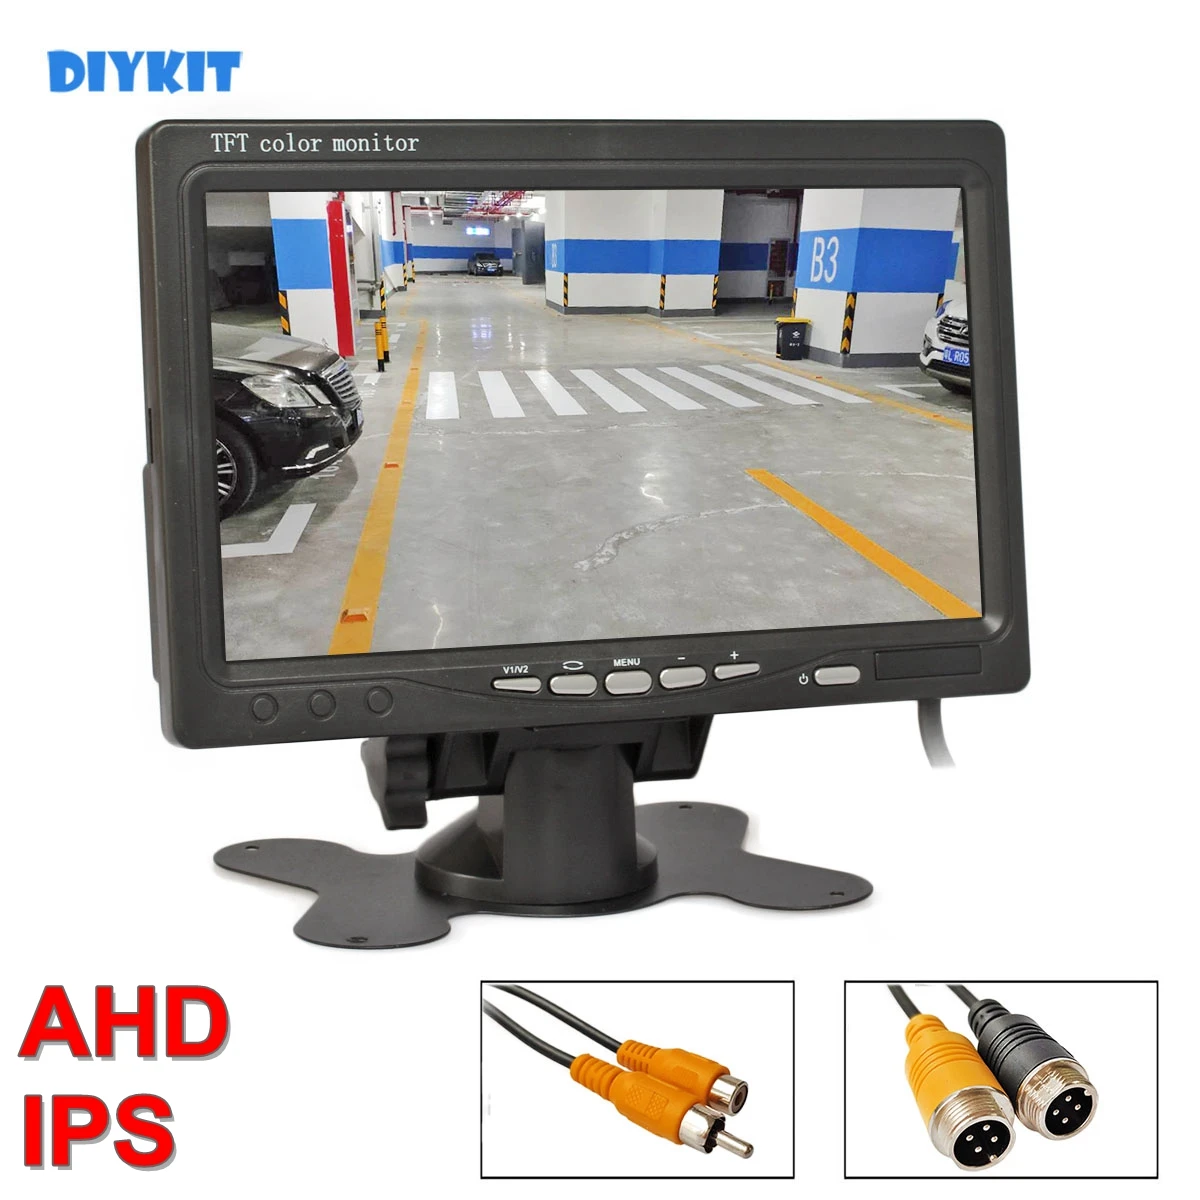 

DIYKIT 7inch AHD IPS LCD Car HD Monitor Rear View Car Monitor Max Support 1080P AHD Camera 2 x 4PIN Video Input